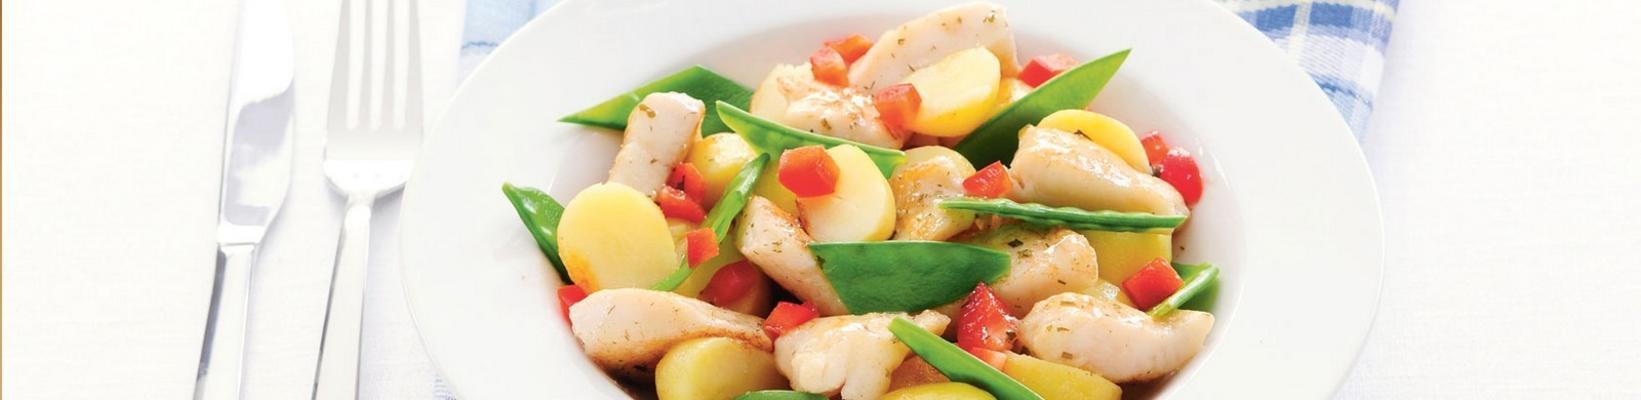 lukewarm potato salad with fish